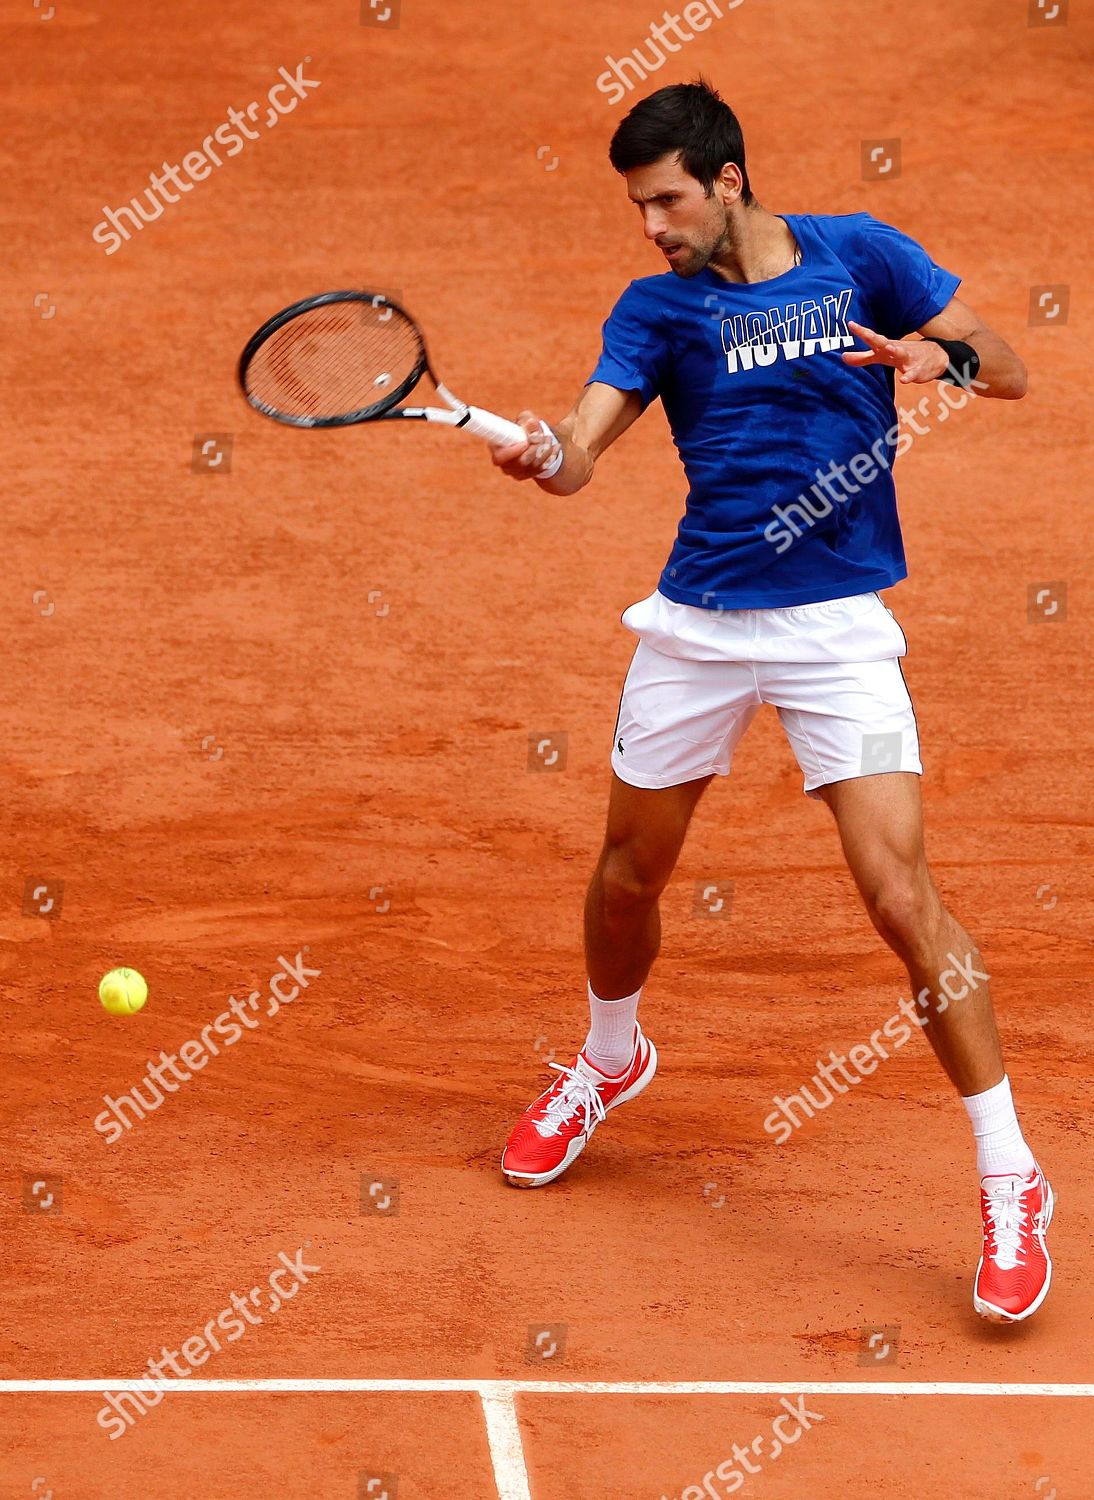 french-open-tennis-championships-practice-day-02-roland-garros-paris-france-shutterstock-editorial-10248036i.jpg